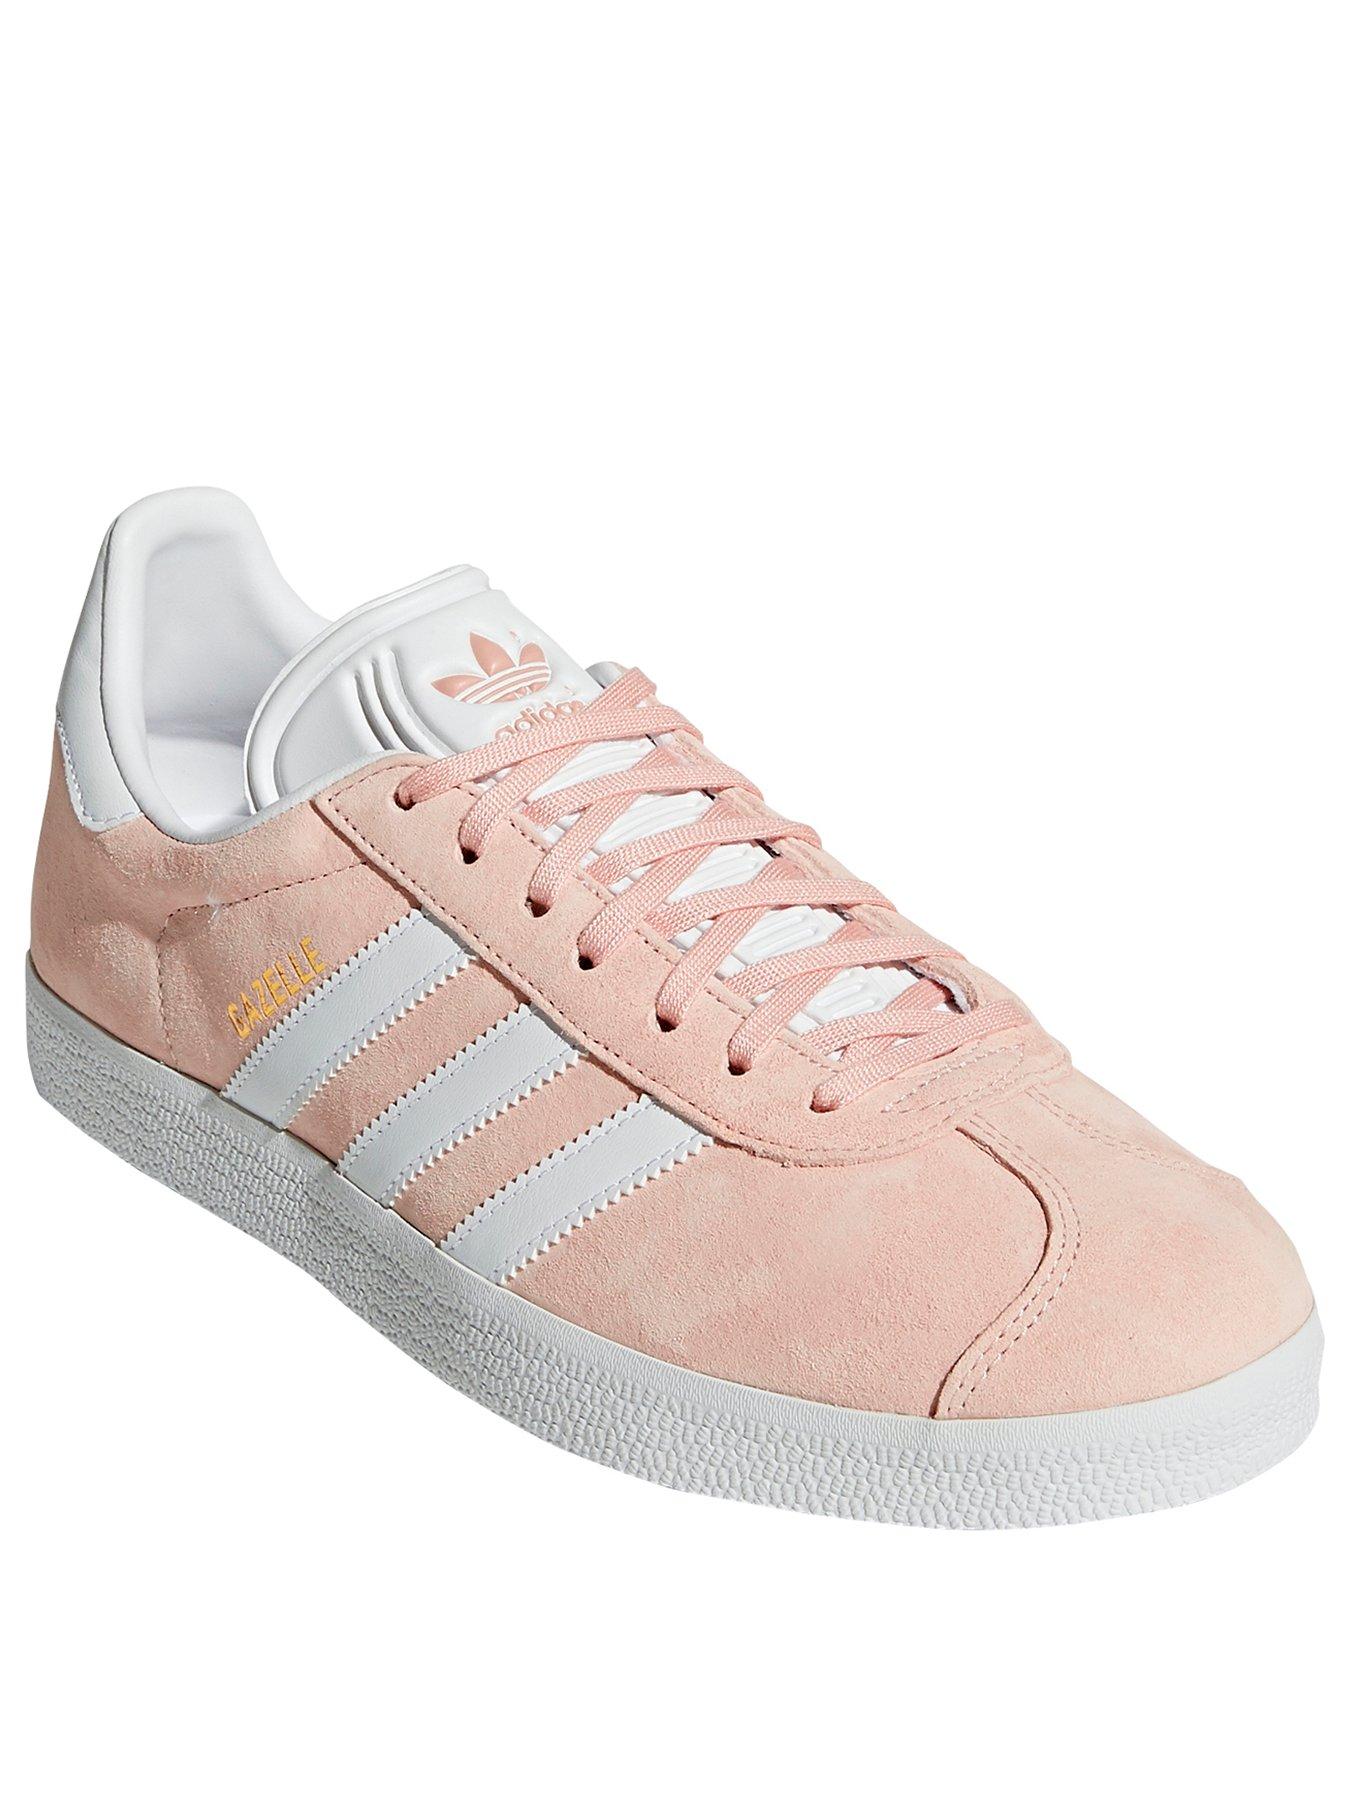 adidas gazelle pink size 6